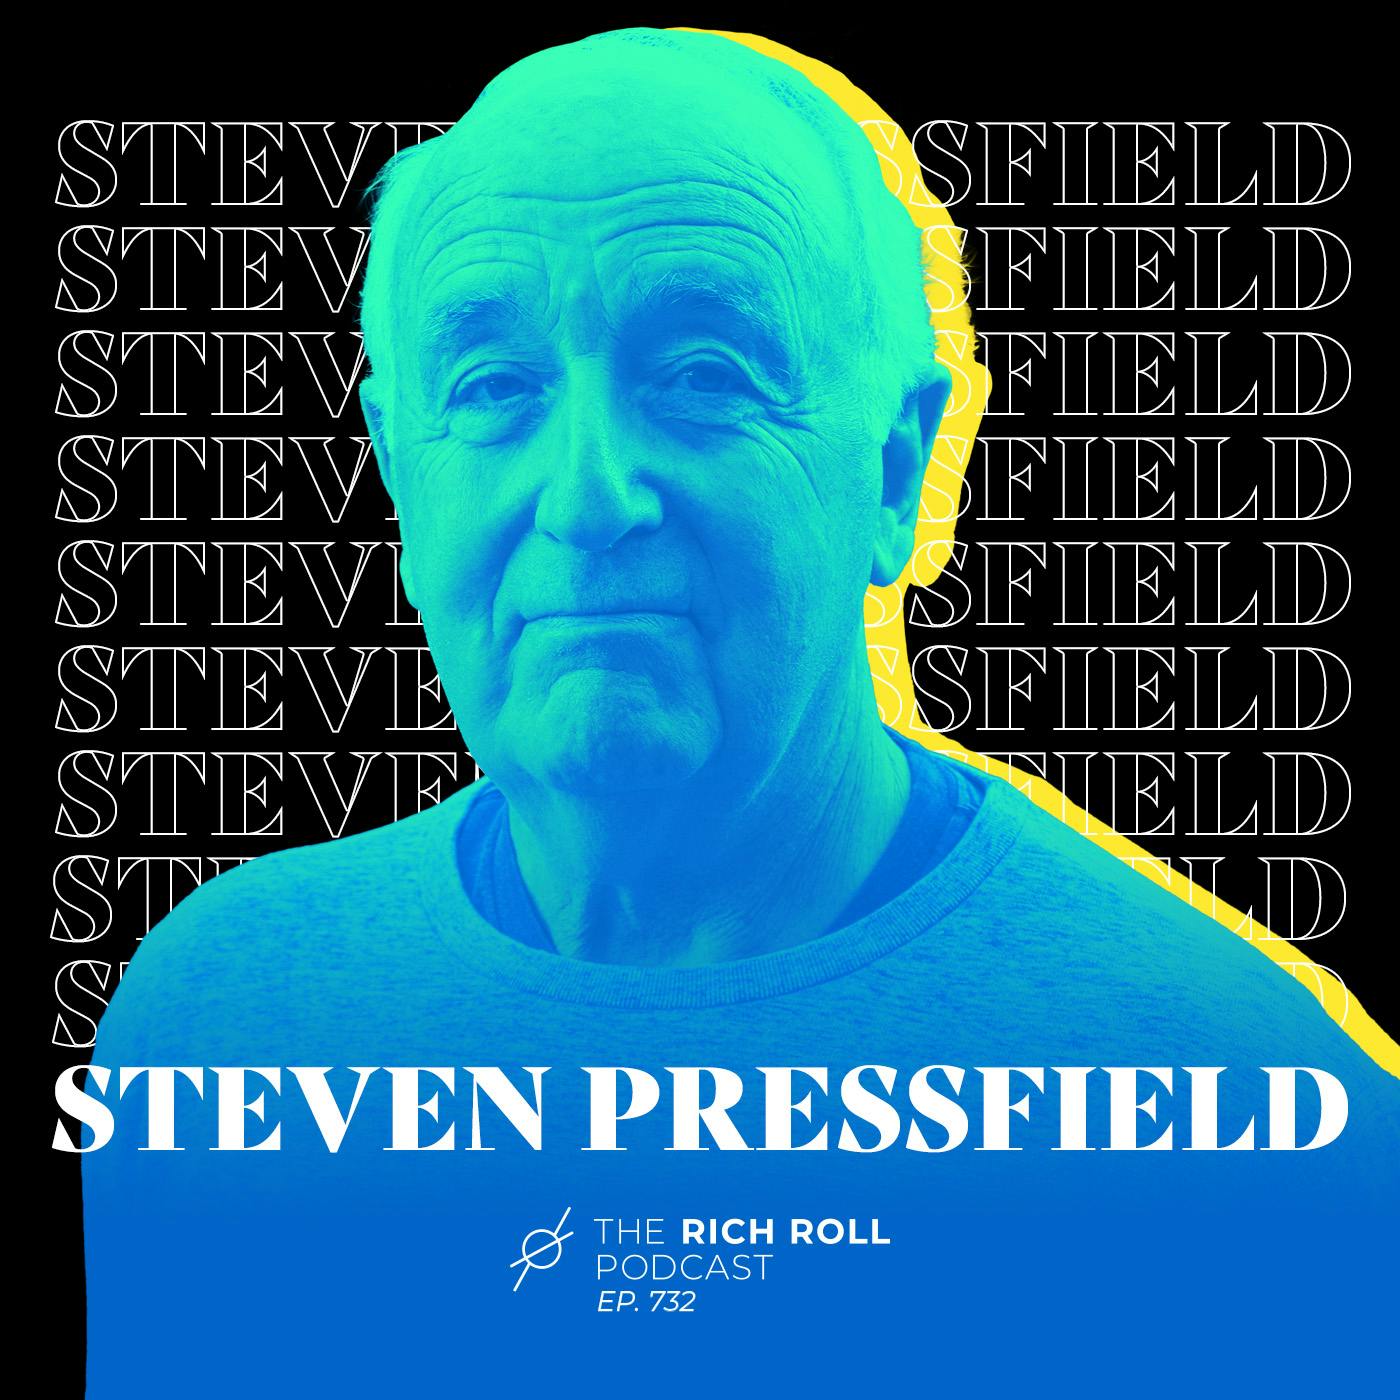 Steven Pressfield: Battle Resistance, Master Your Craft, & Pursue Your Calling